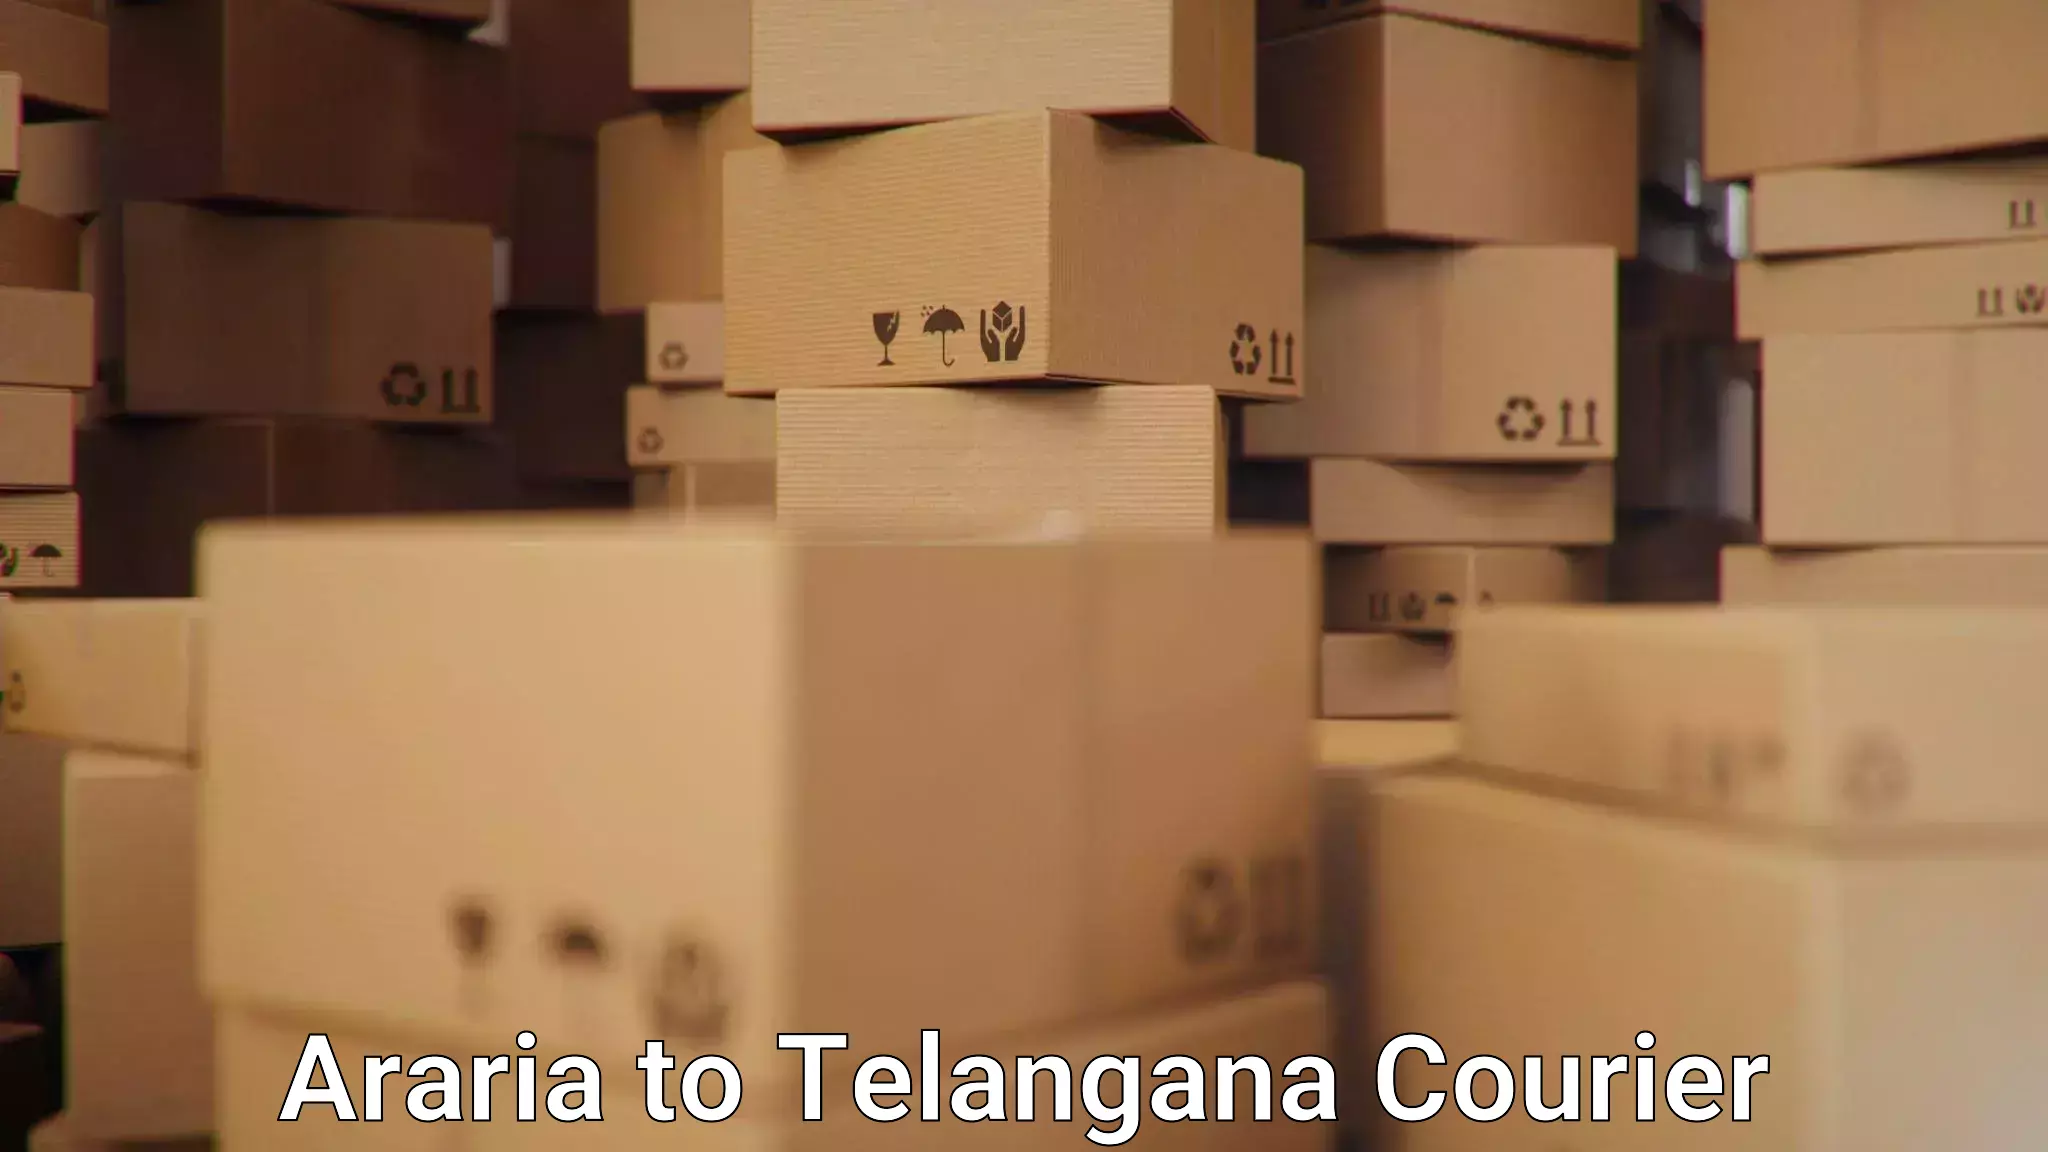 Courier service partnerships Araria to Telangana